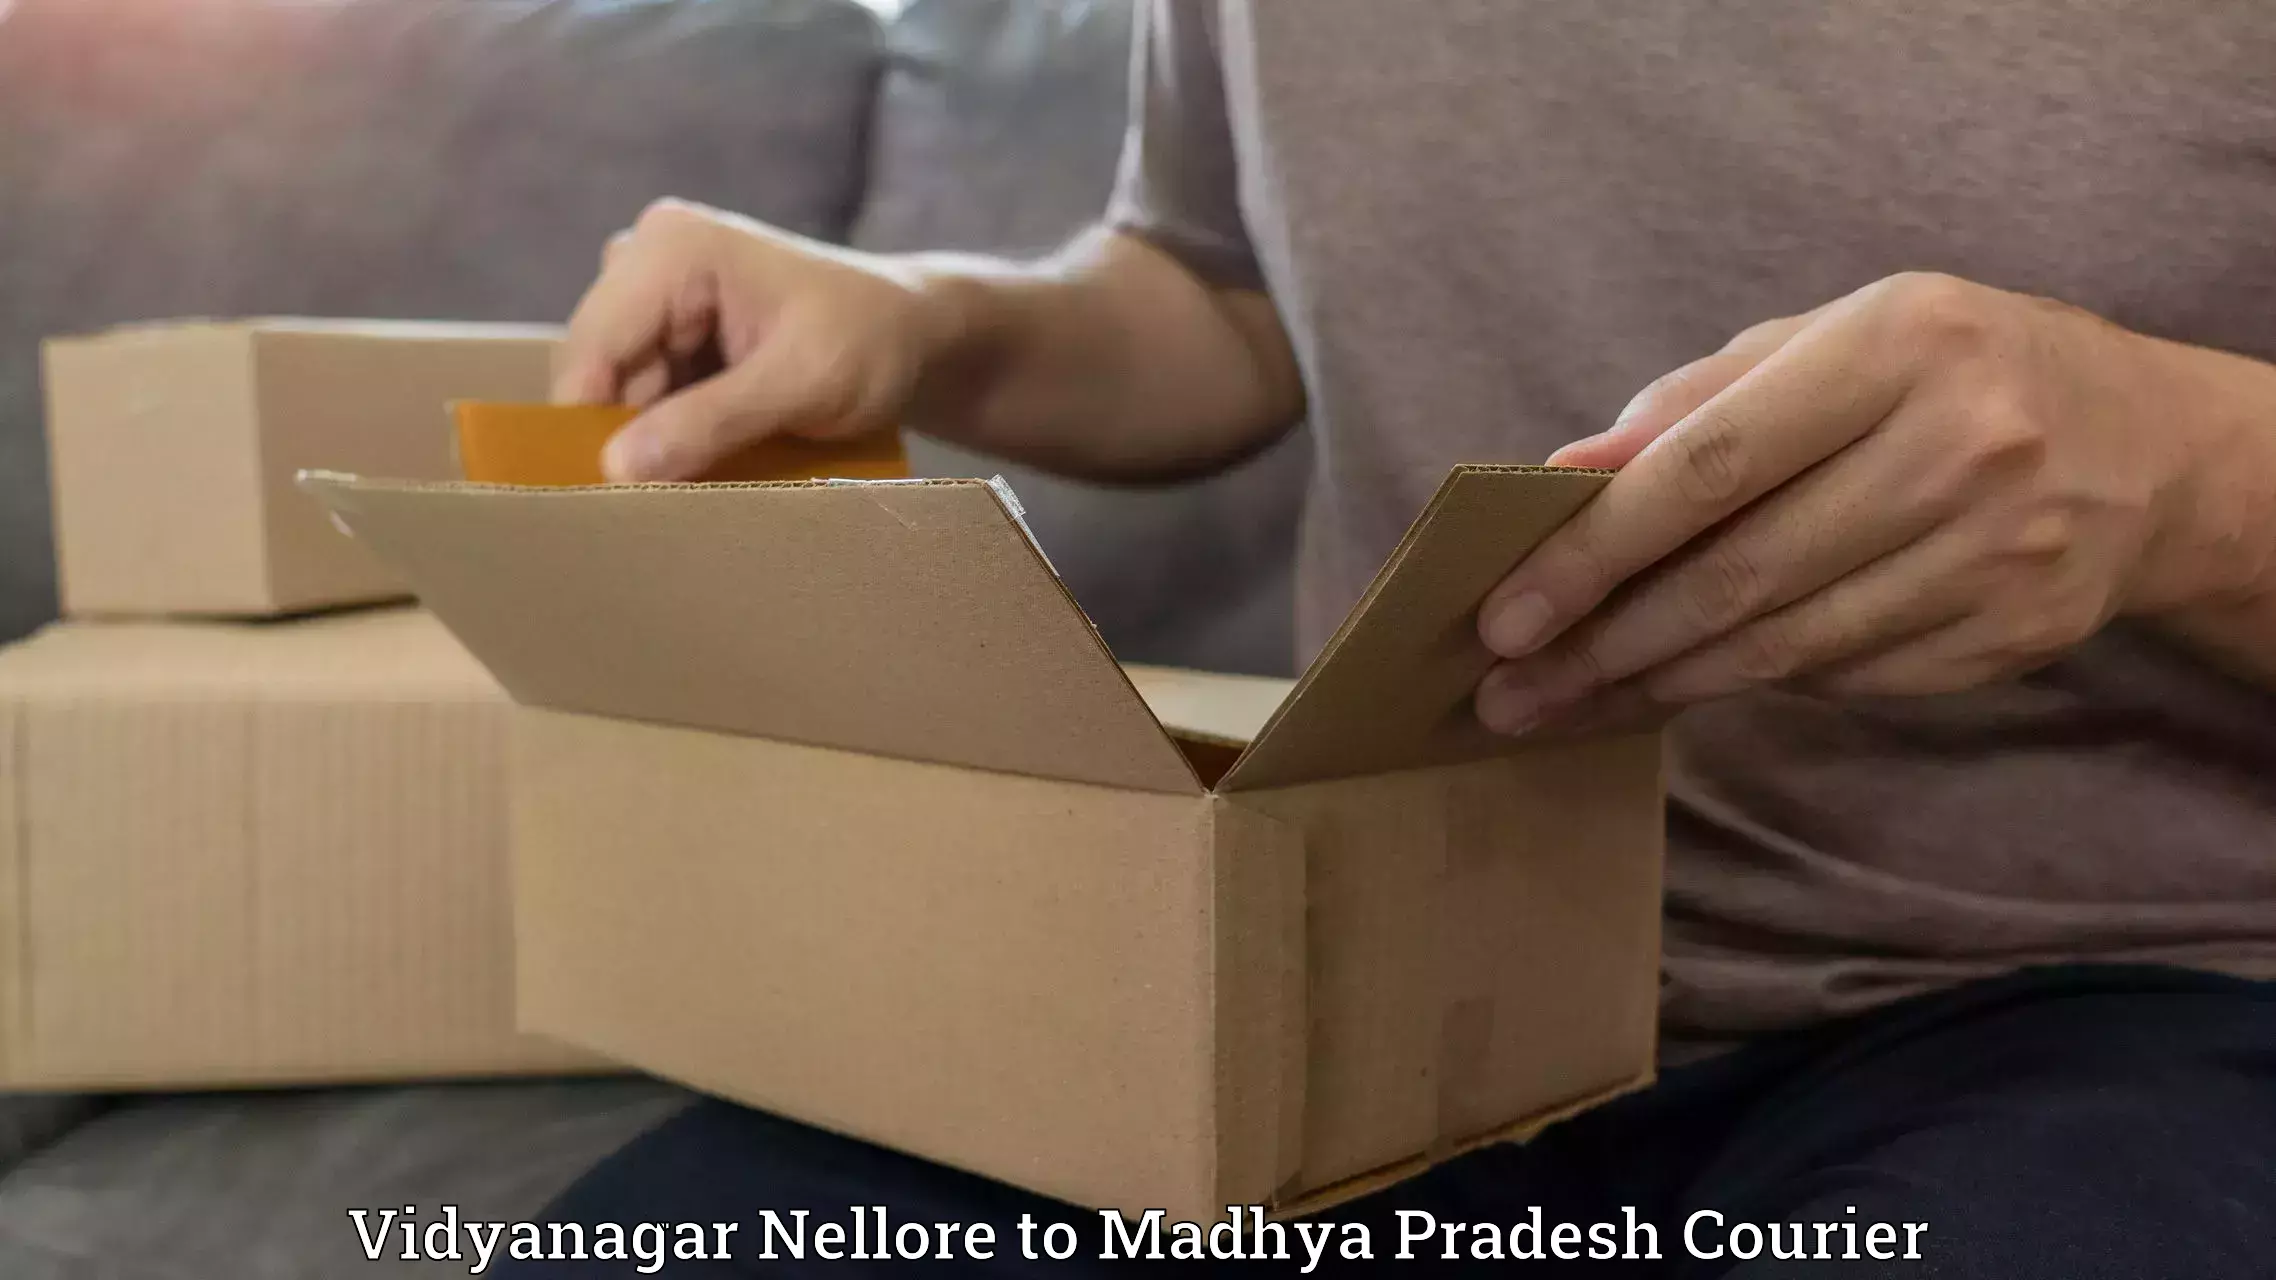 Lightweight parcel options Vidyanagar Nellore to Majhgawa